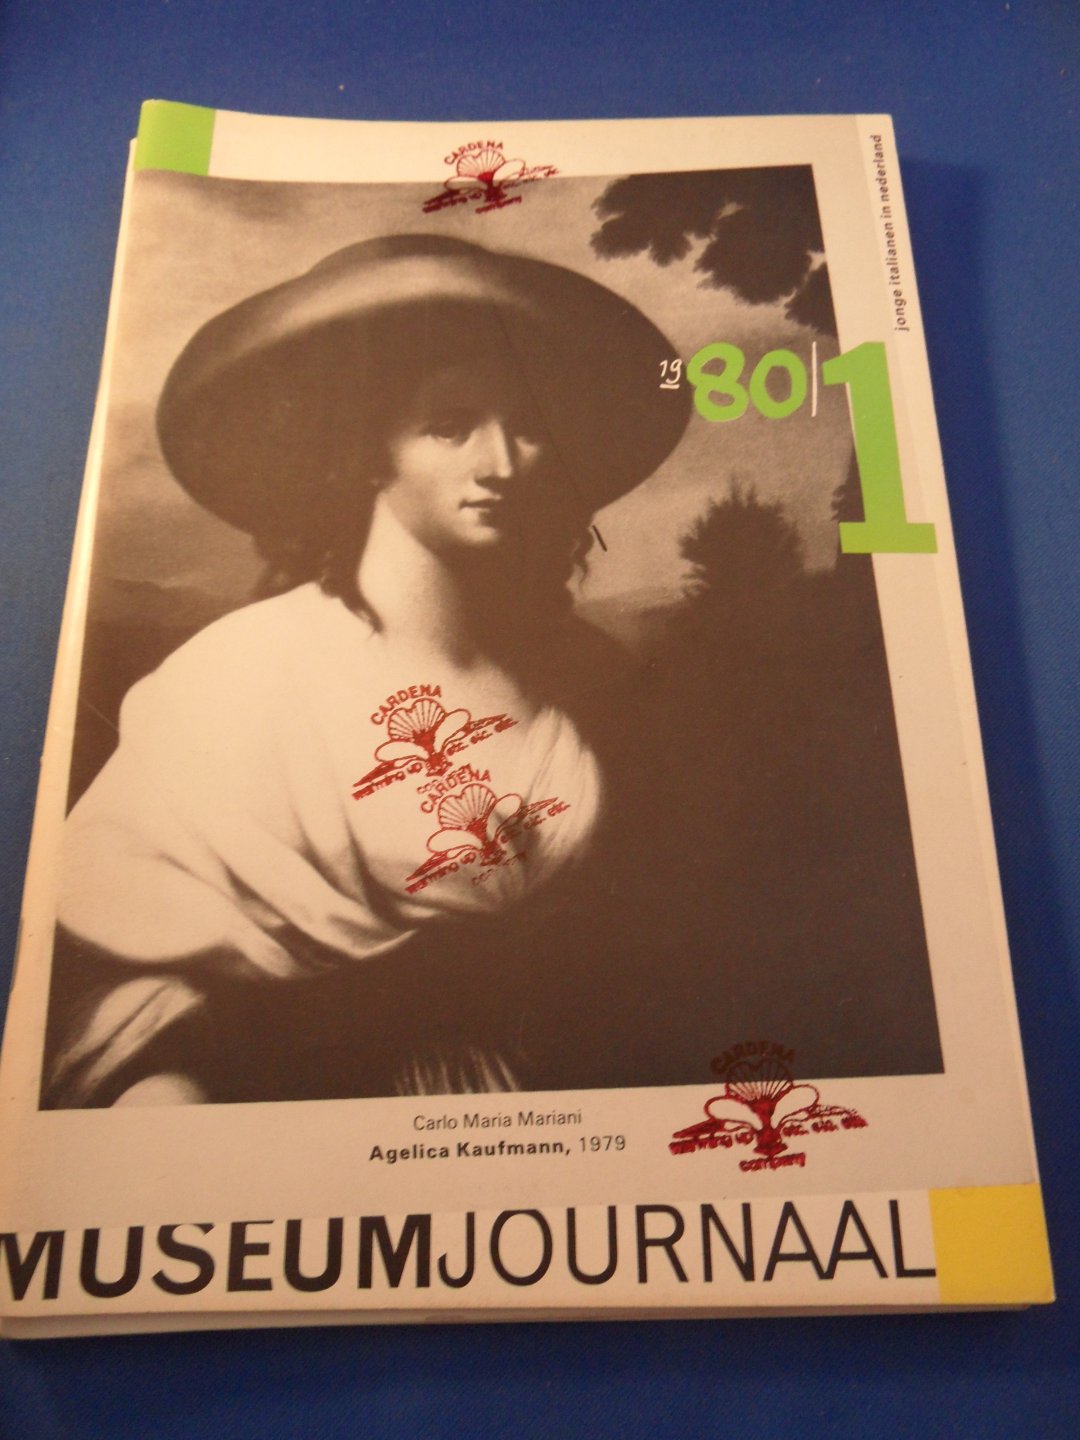 Museumjournaal - Museumjournaal serie 25: no. 1